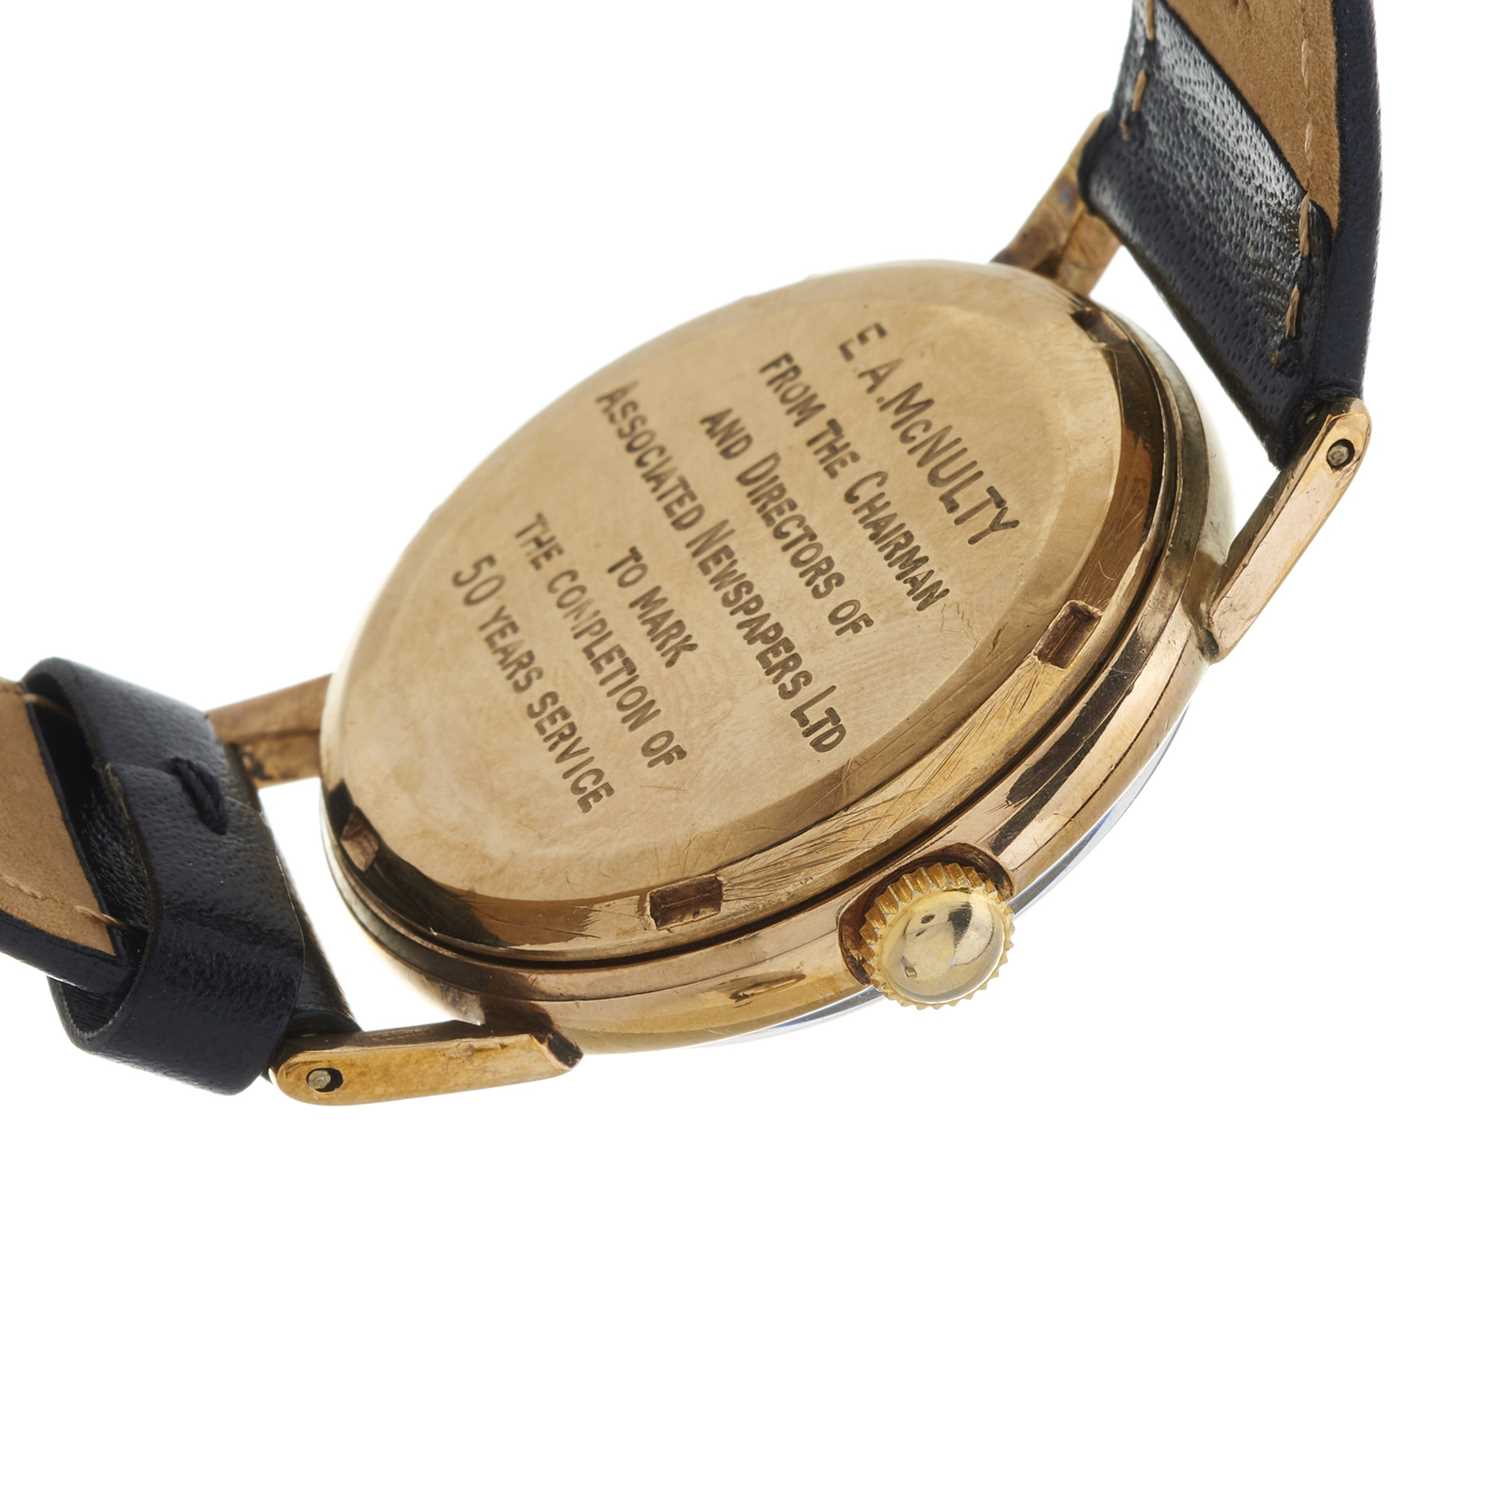 Rolex, a 9ct gold Precision wrist watch - Image 3 of 3